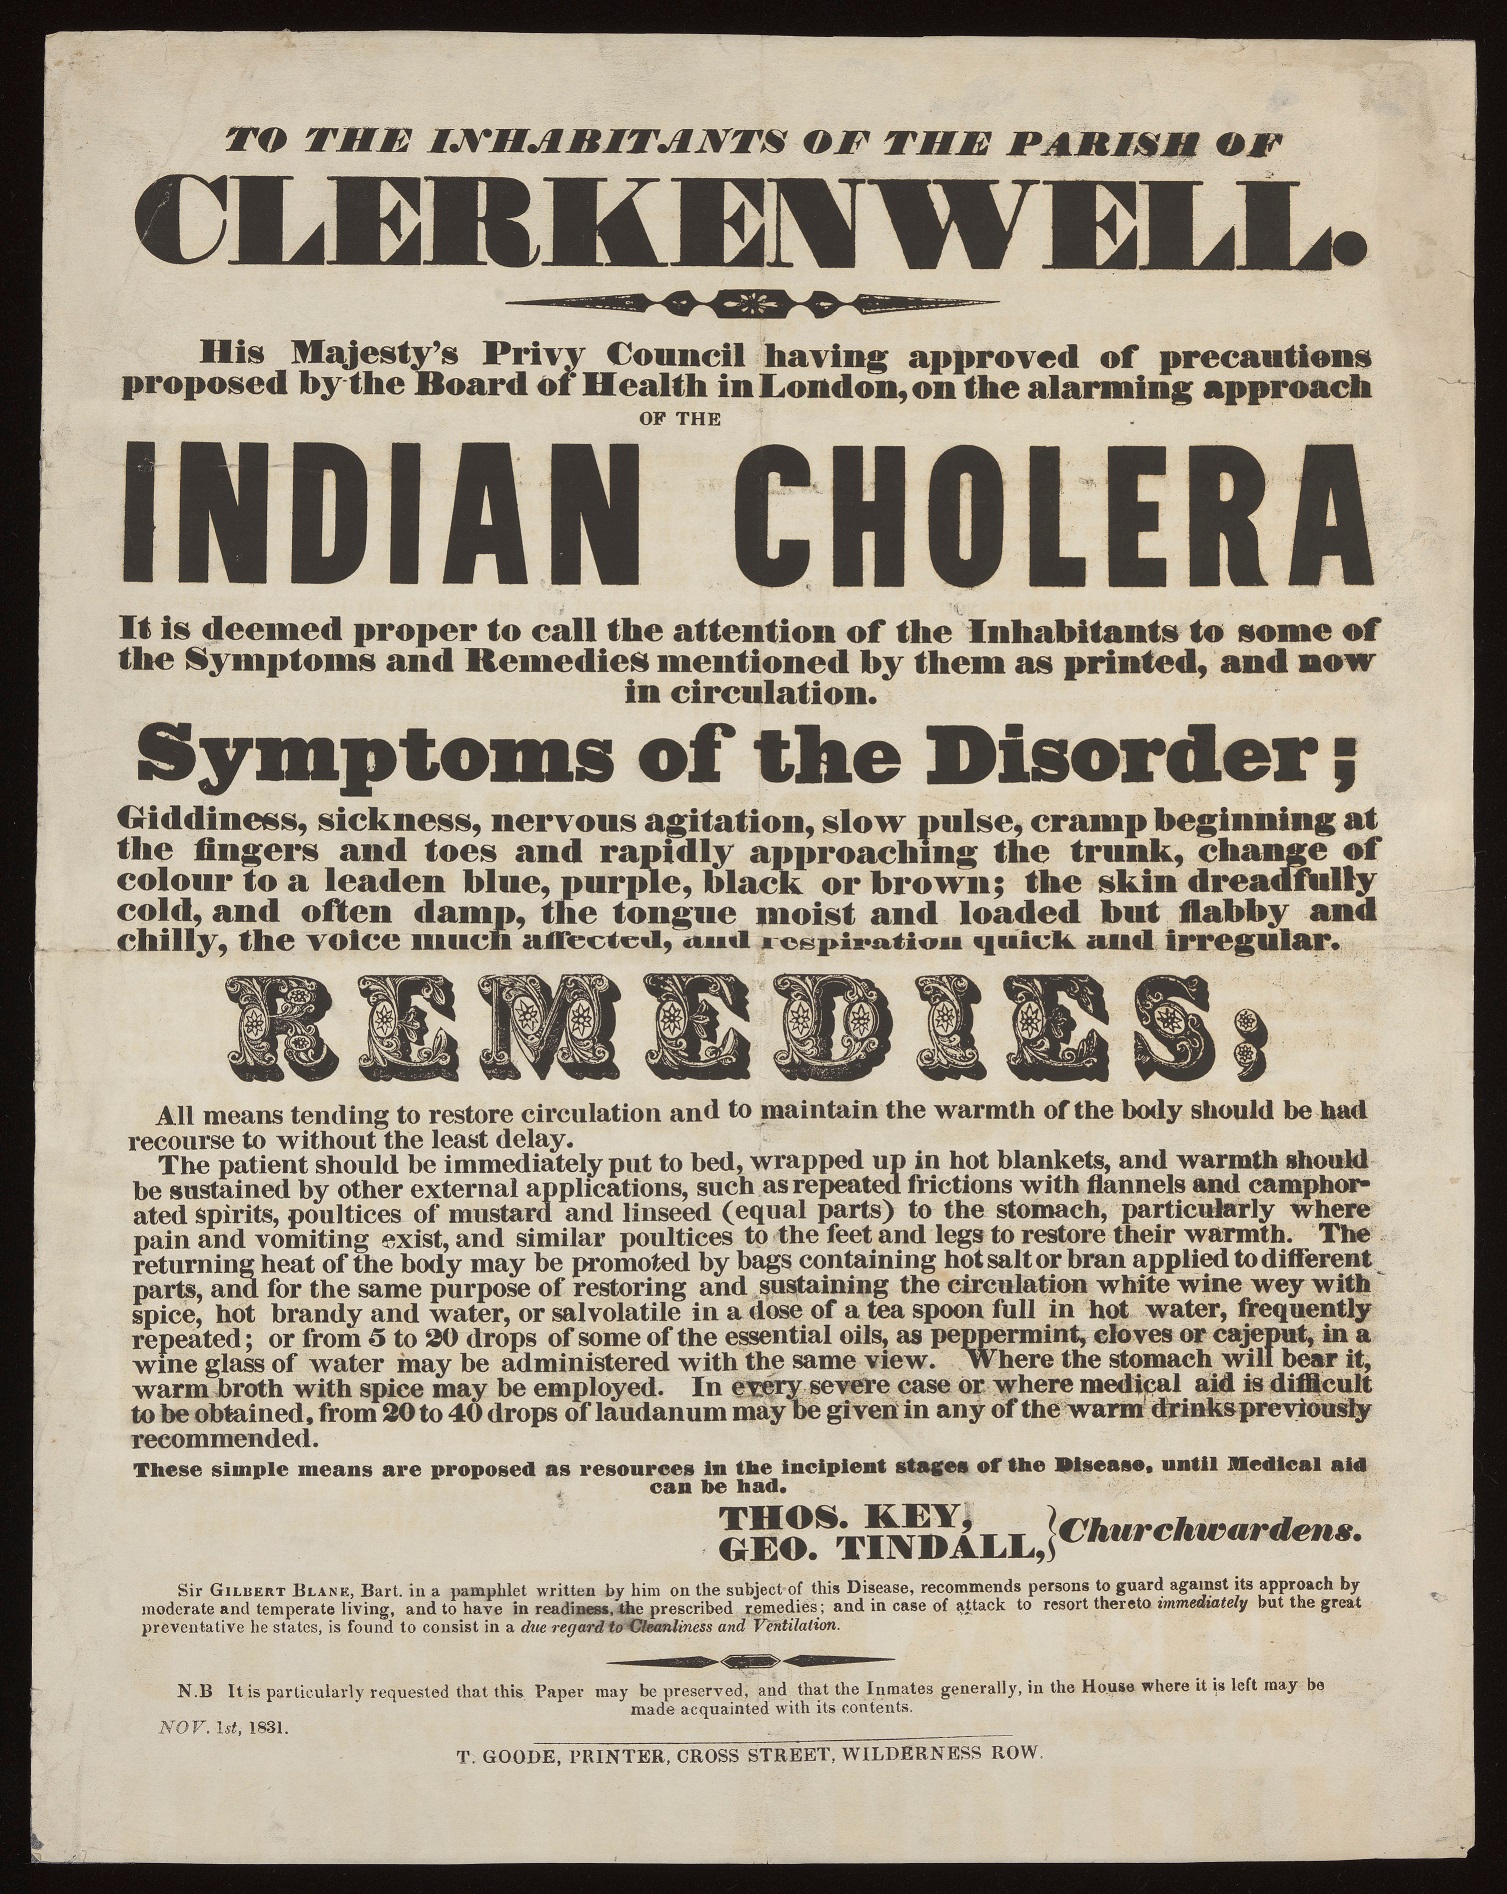 A historic brochure announces an "Indian cholera" outbreak.